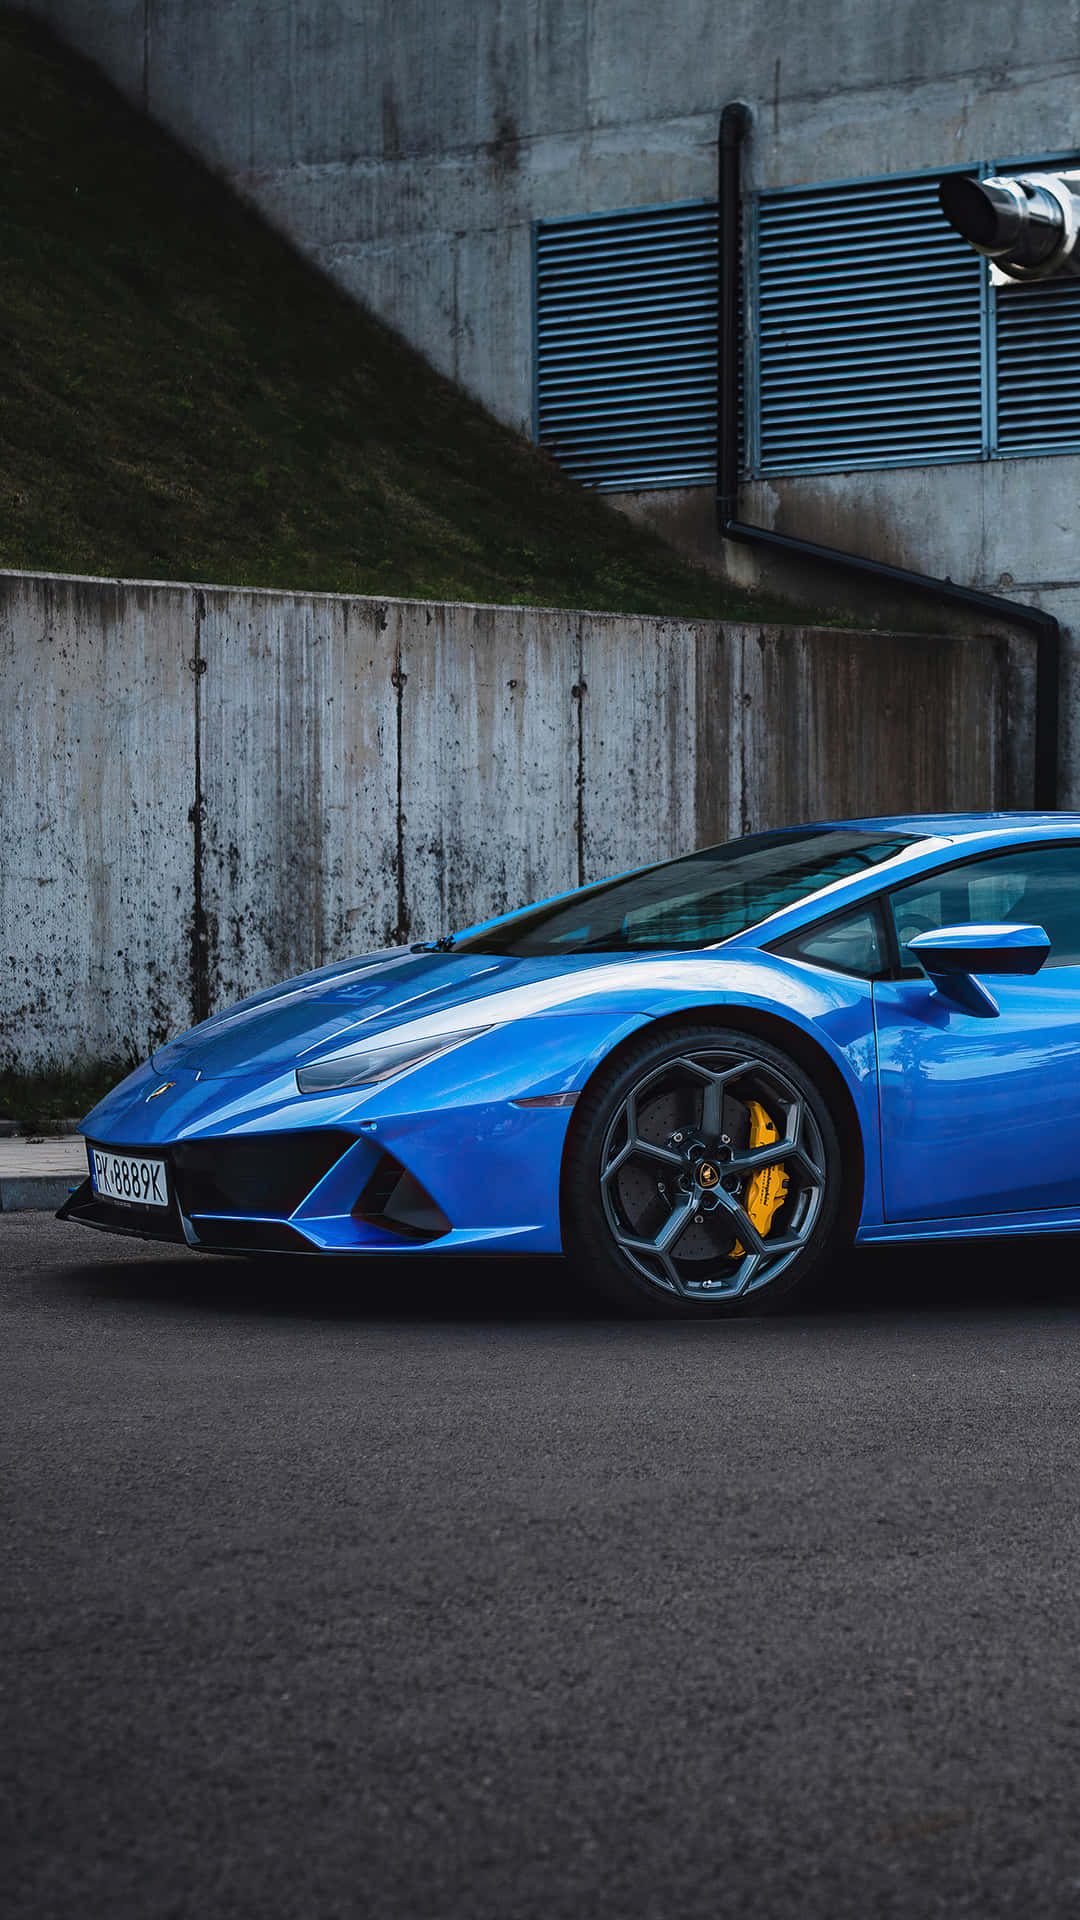 Enjoy the ride of luxury in a Blue Lamborghini Wallpaper